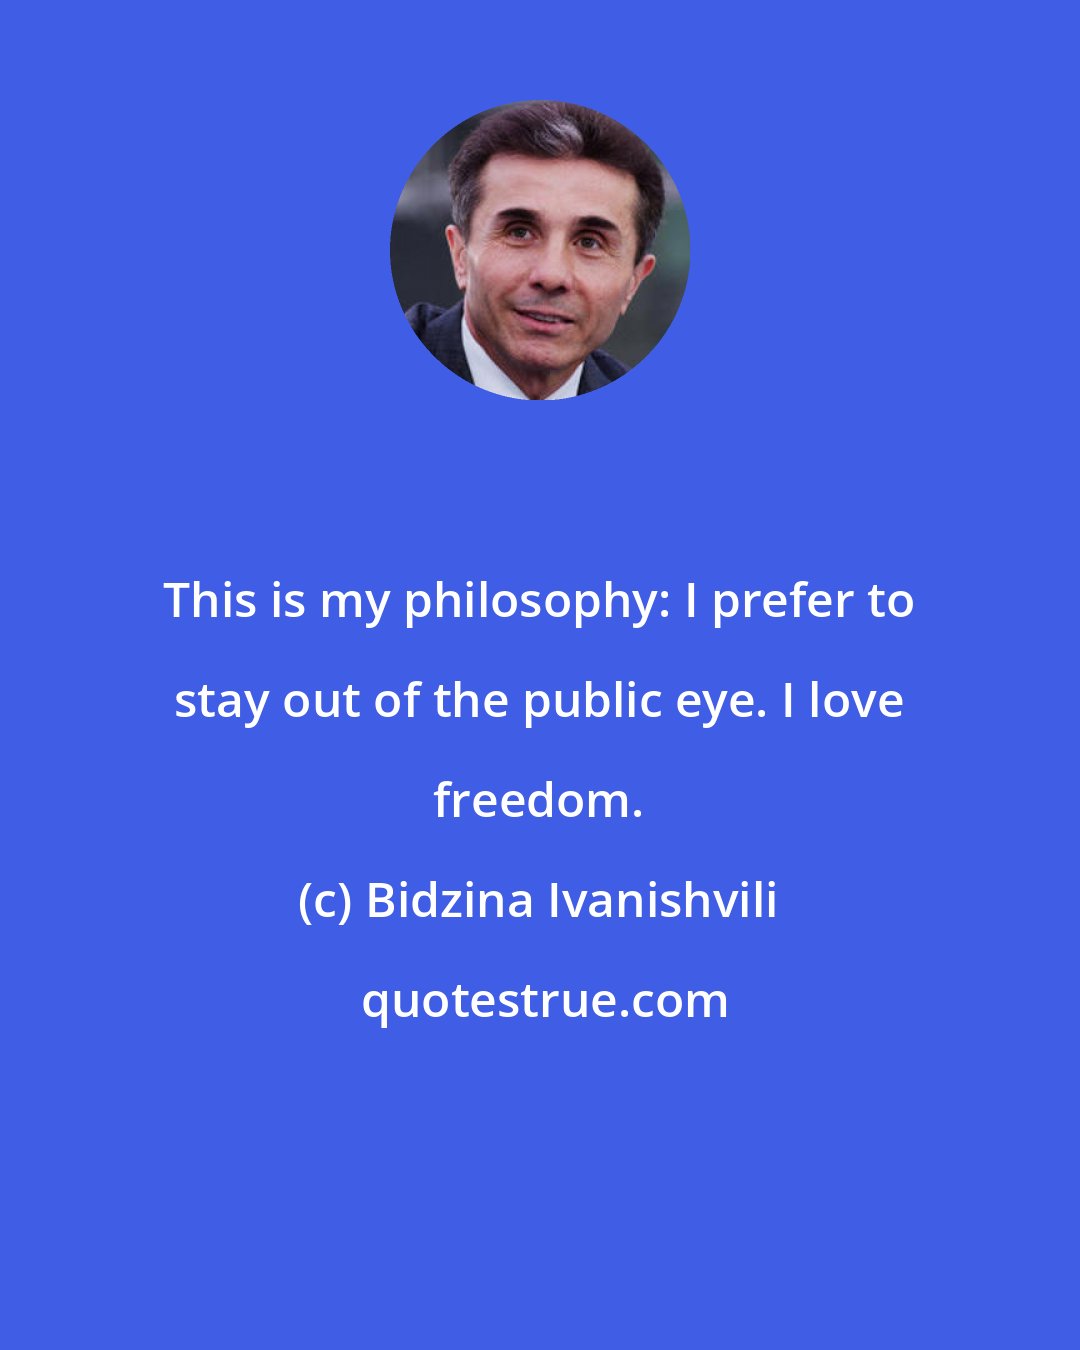 Bidzina Ivanishvili: This is my philosophy: I prefer to stay out of the public eye. I love freedom.